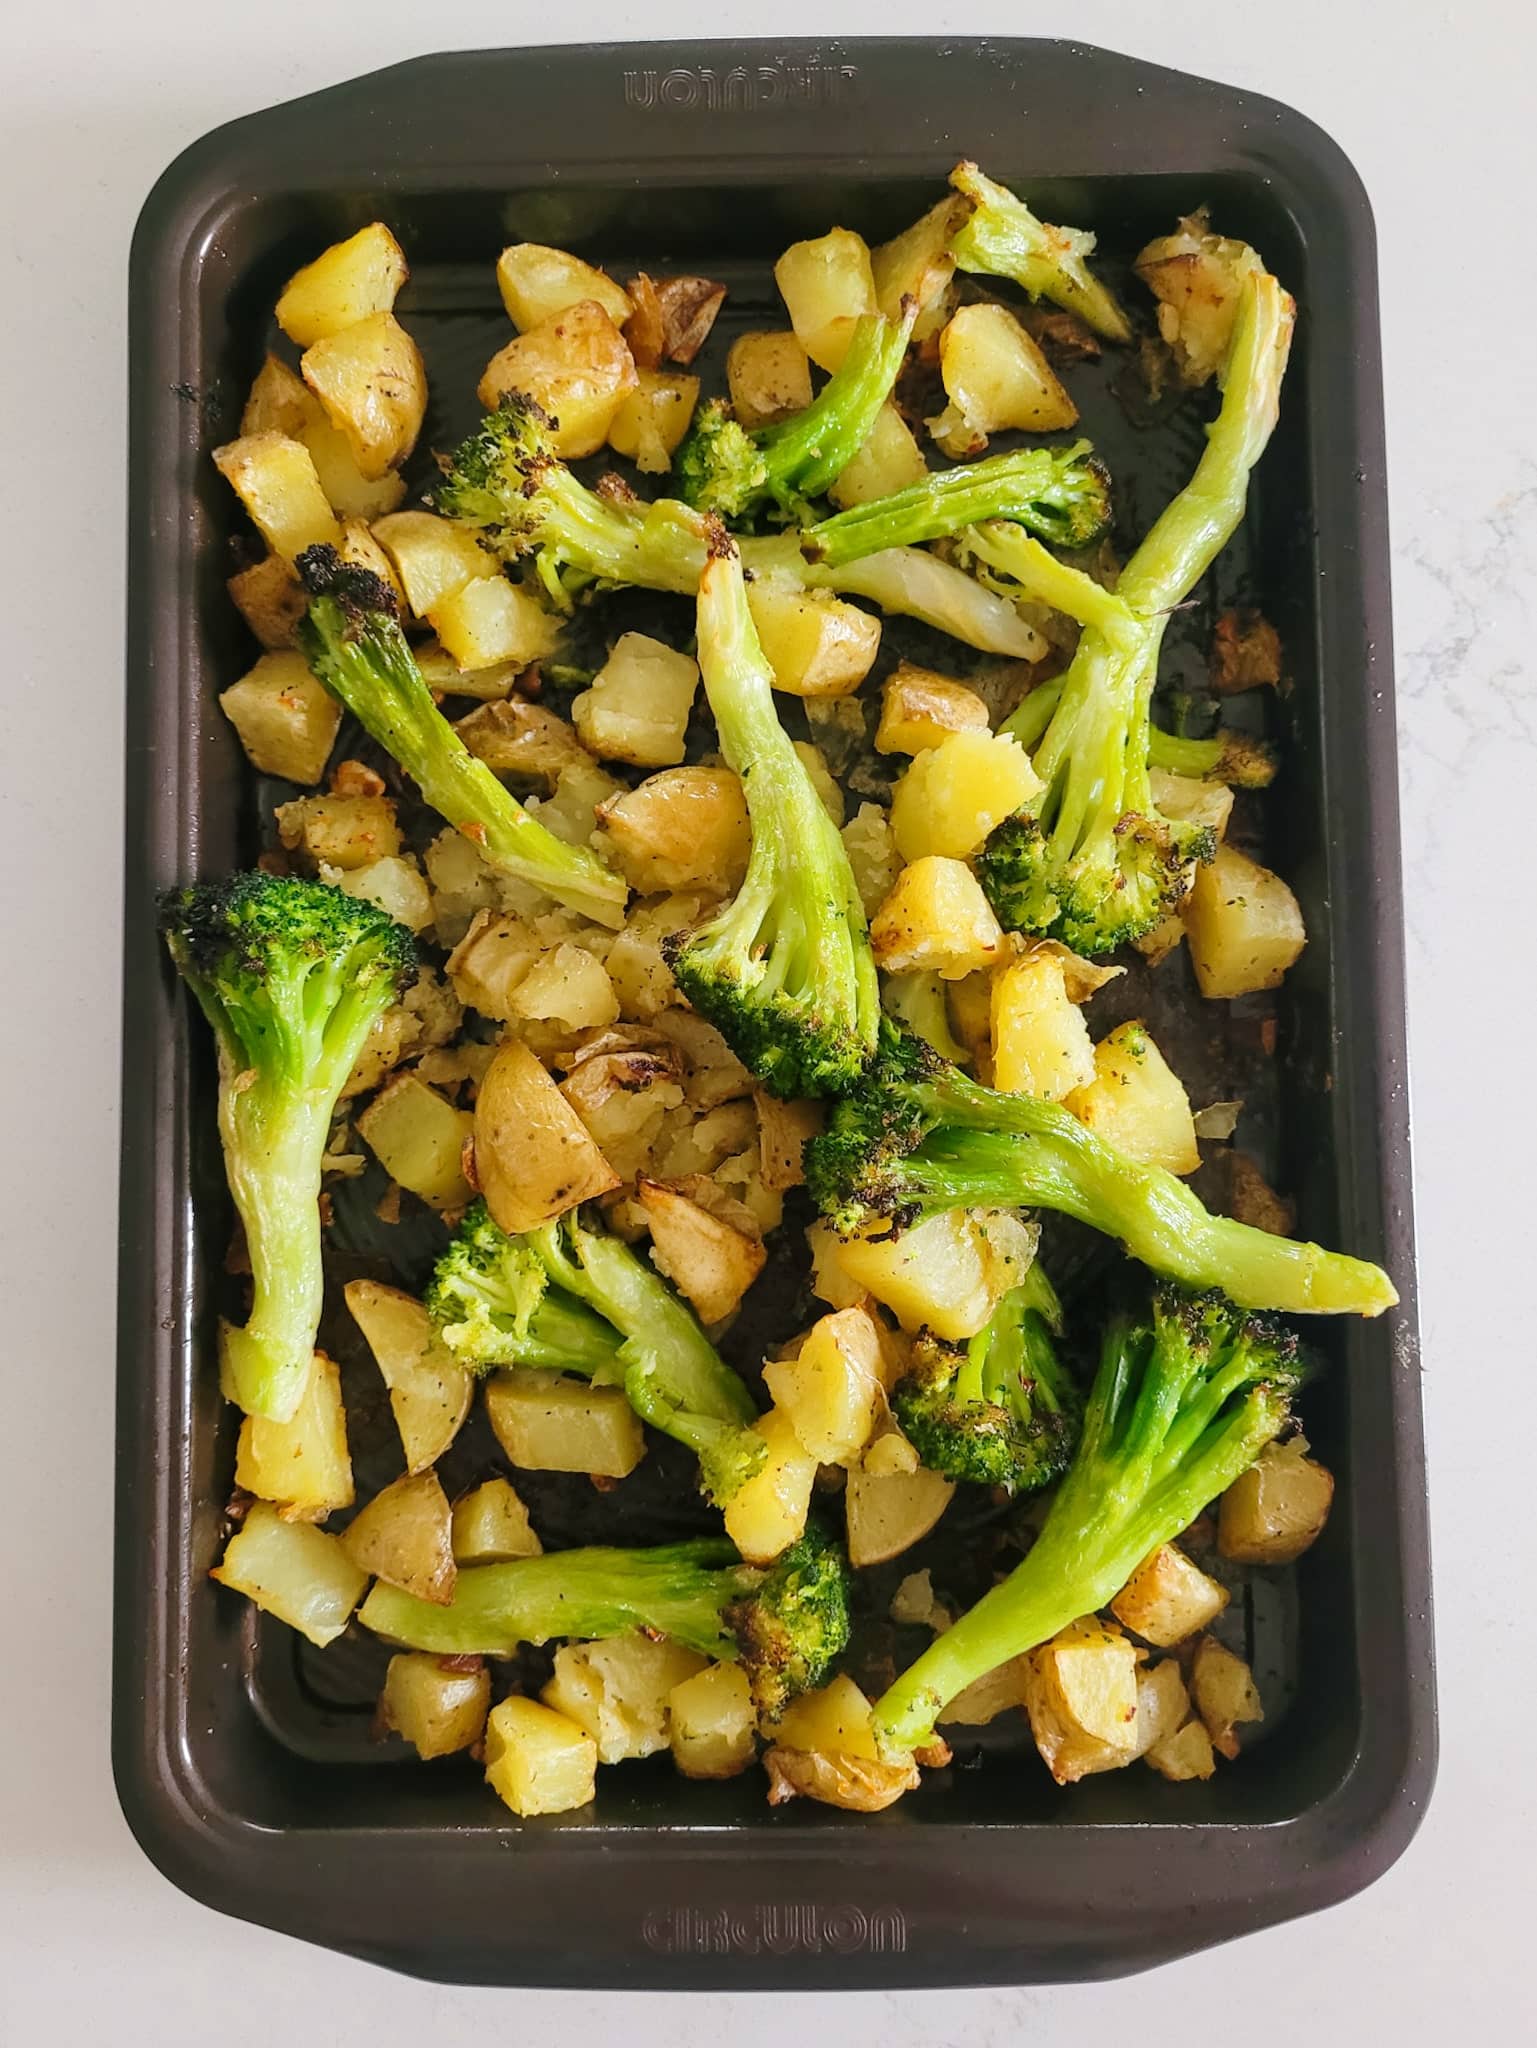 oven roasted potatoes and broccoli